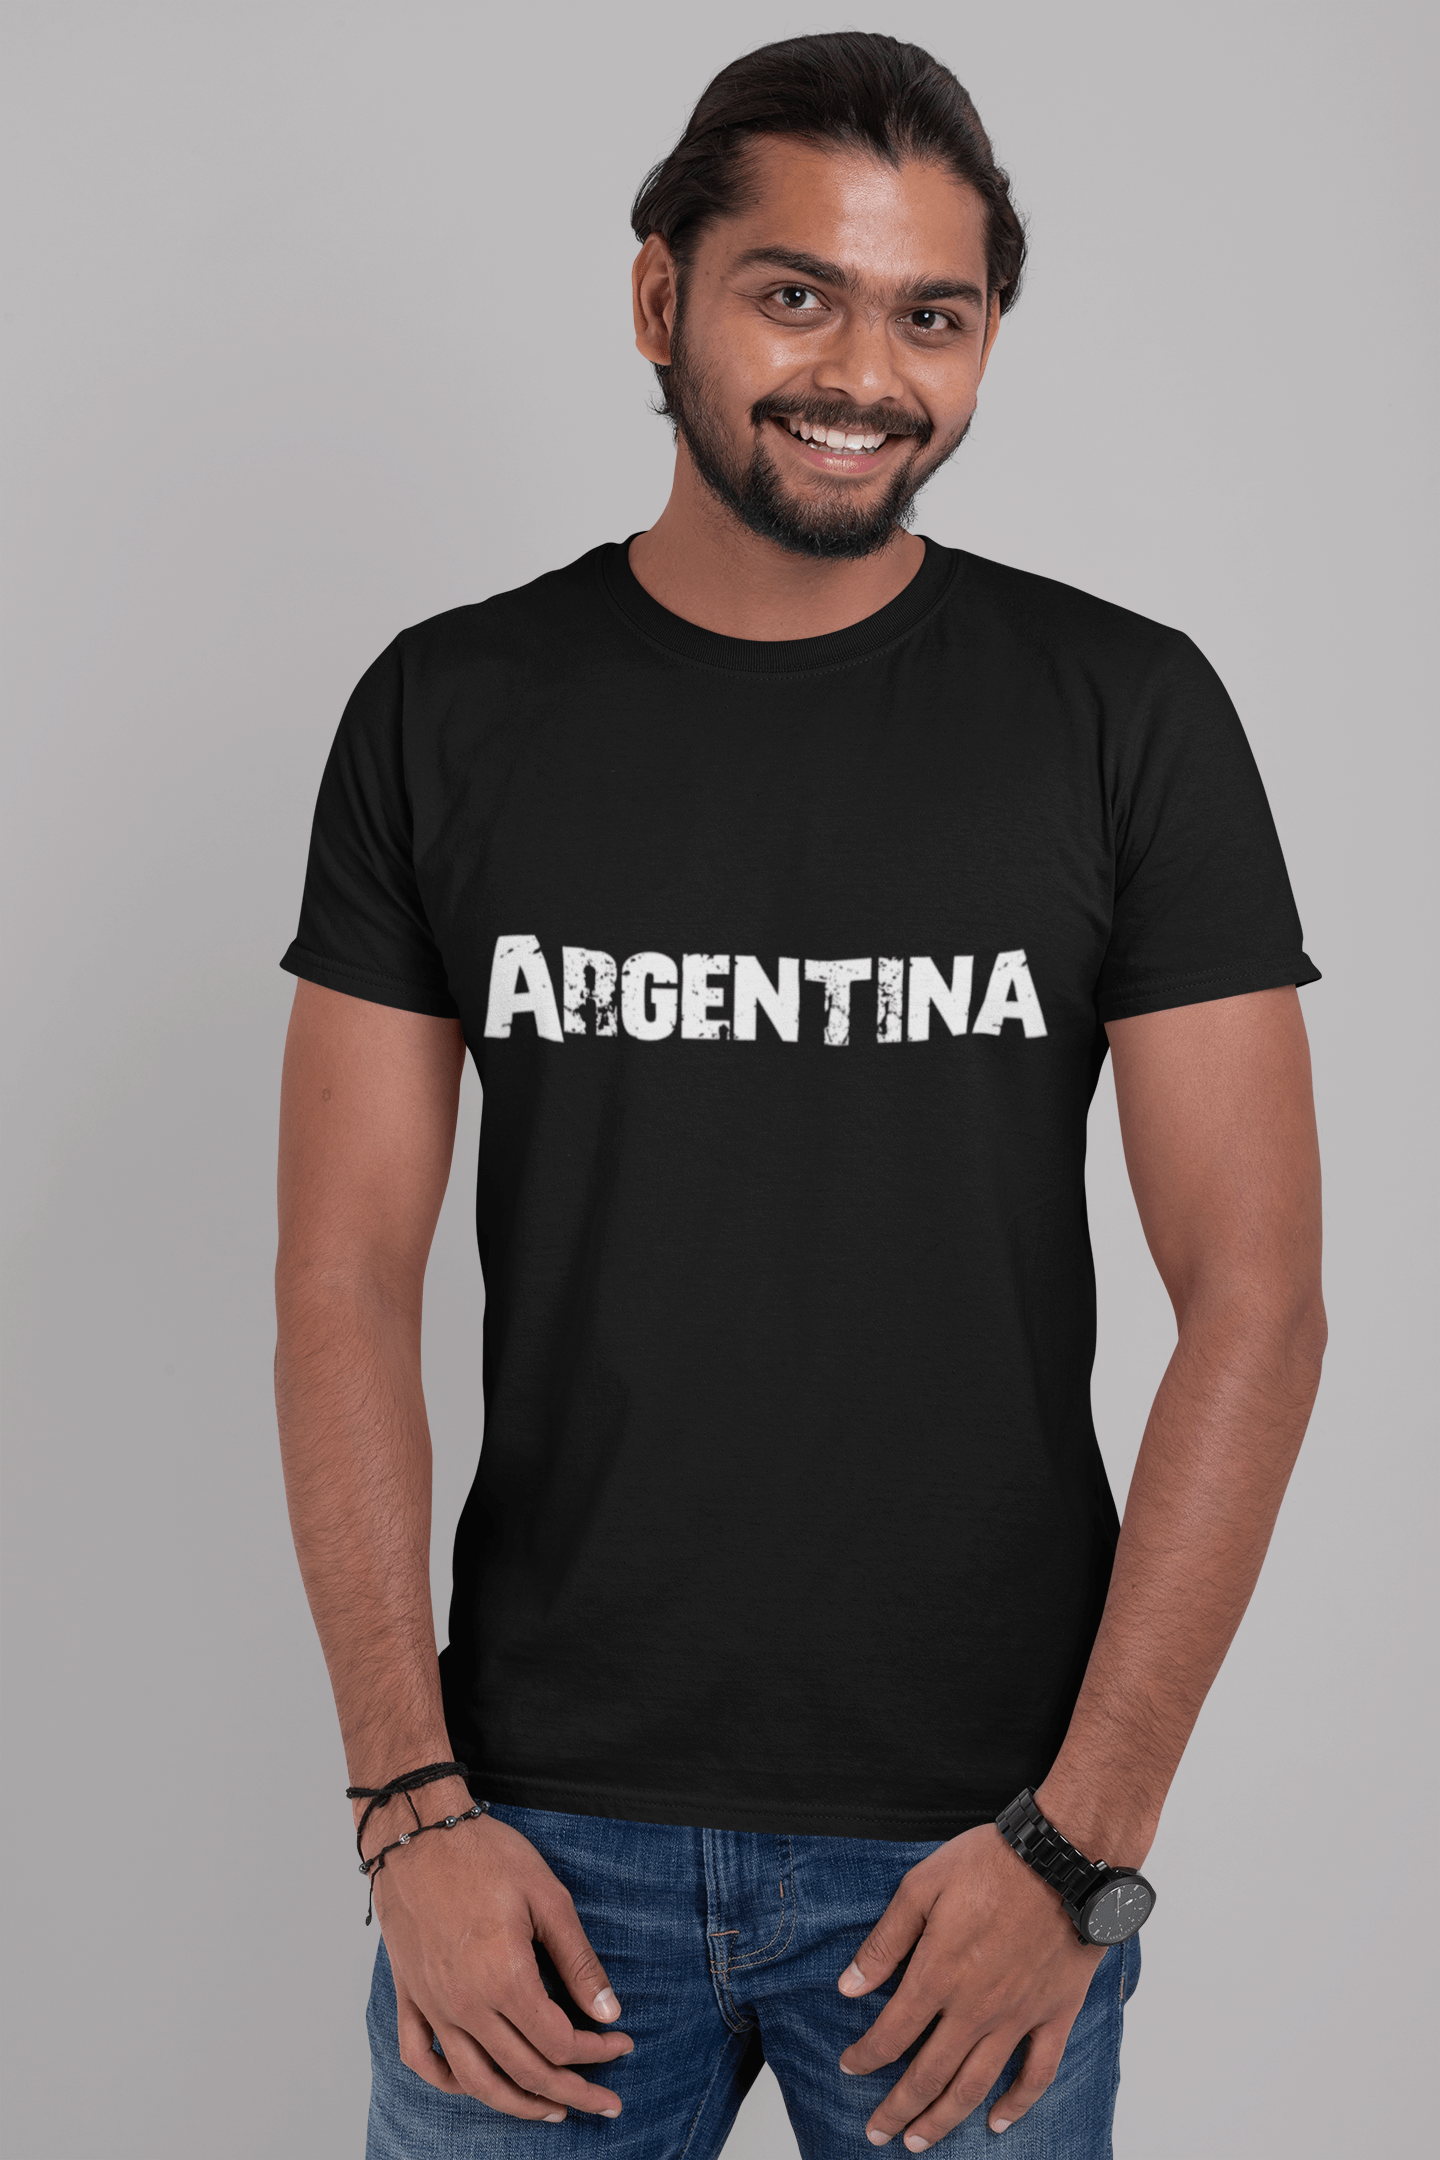 Argentina Men's T shirt Black Birthday Gift 00550